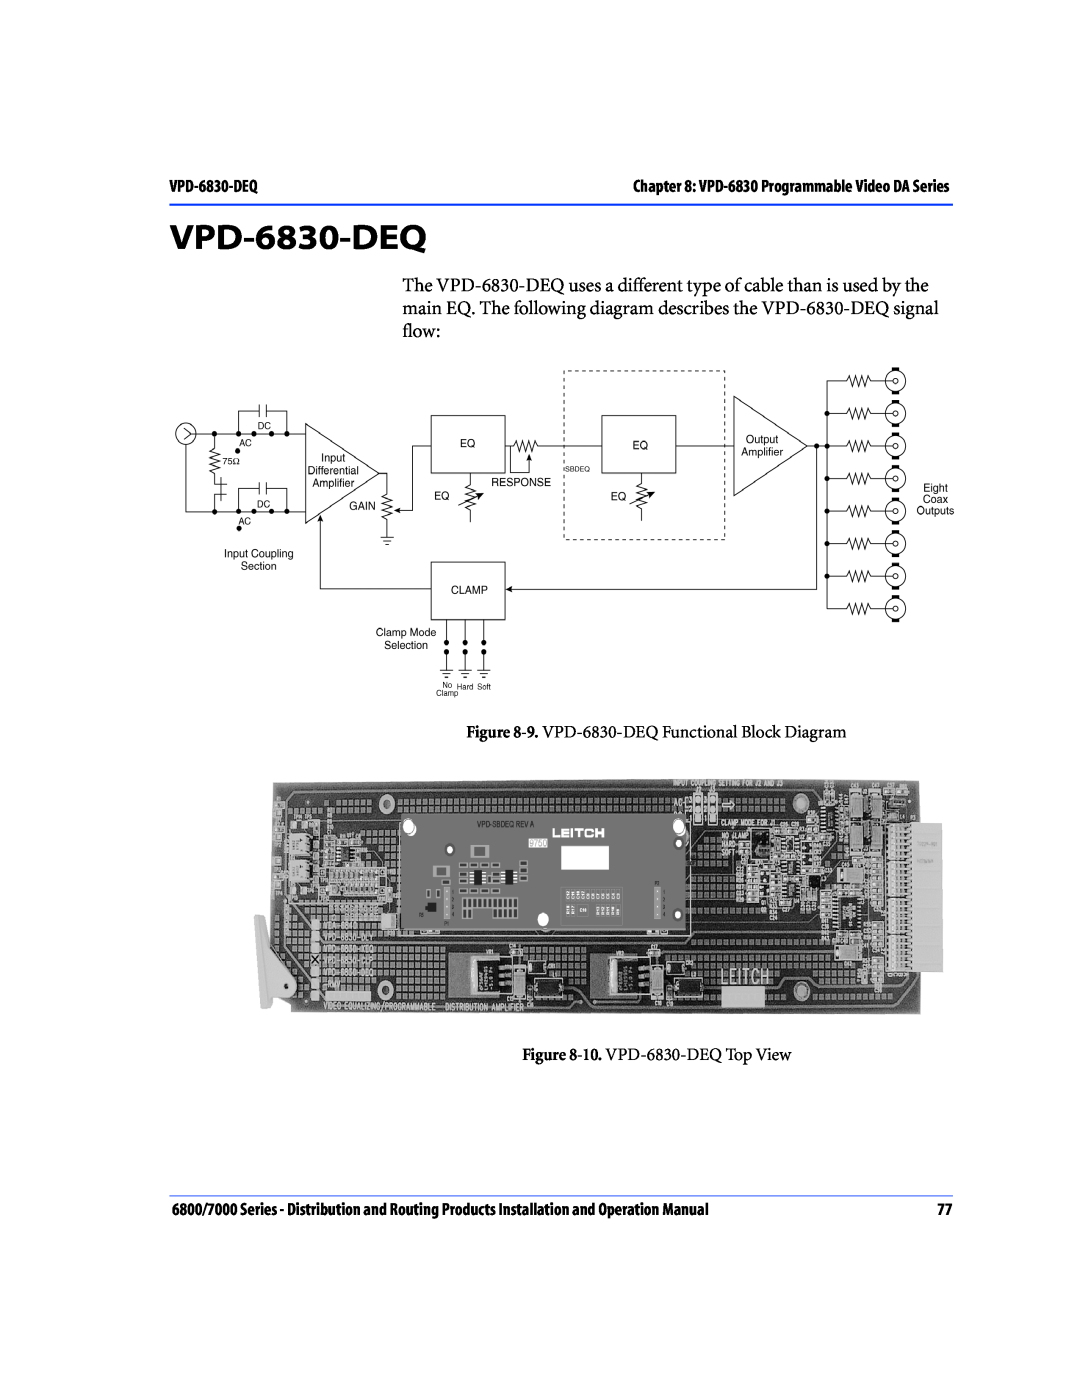 Nokia 6800 Series, 7000 Series operation manual 9. VPD-6830-DEQ Functional Block Diagram, 10. VPD-6830-DEQ Top View 